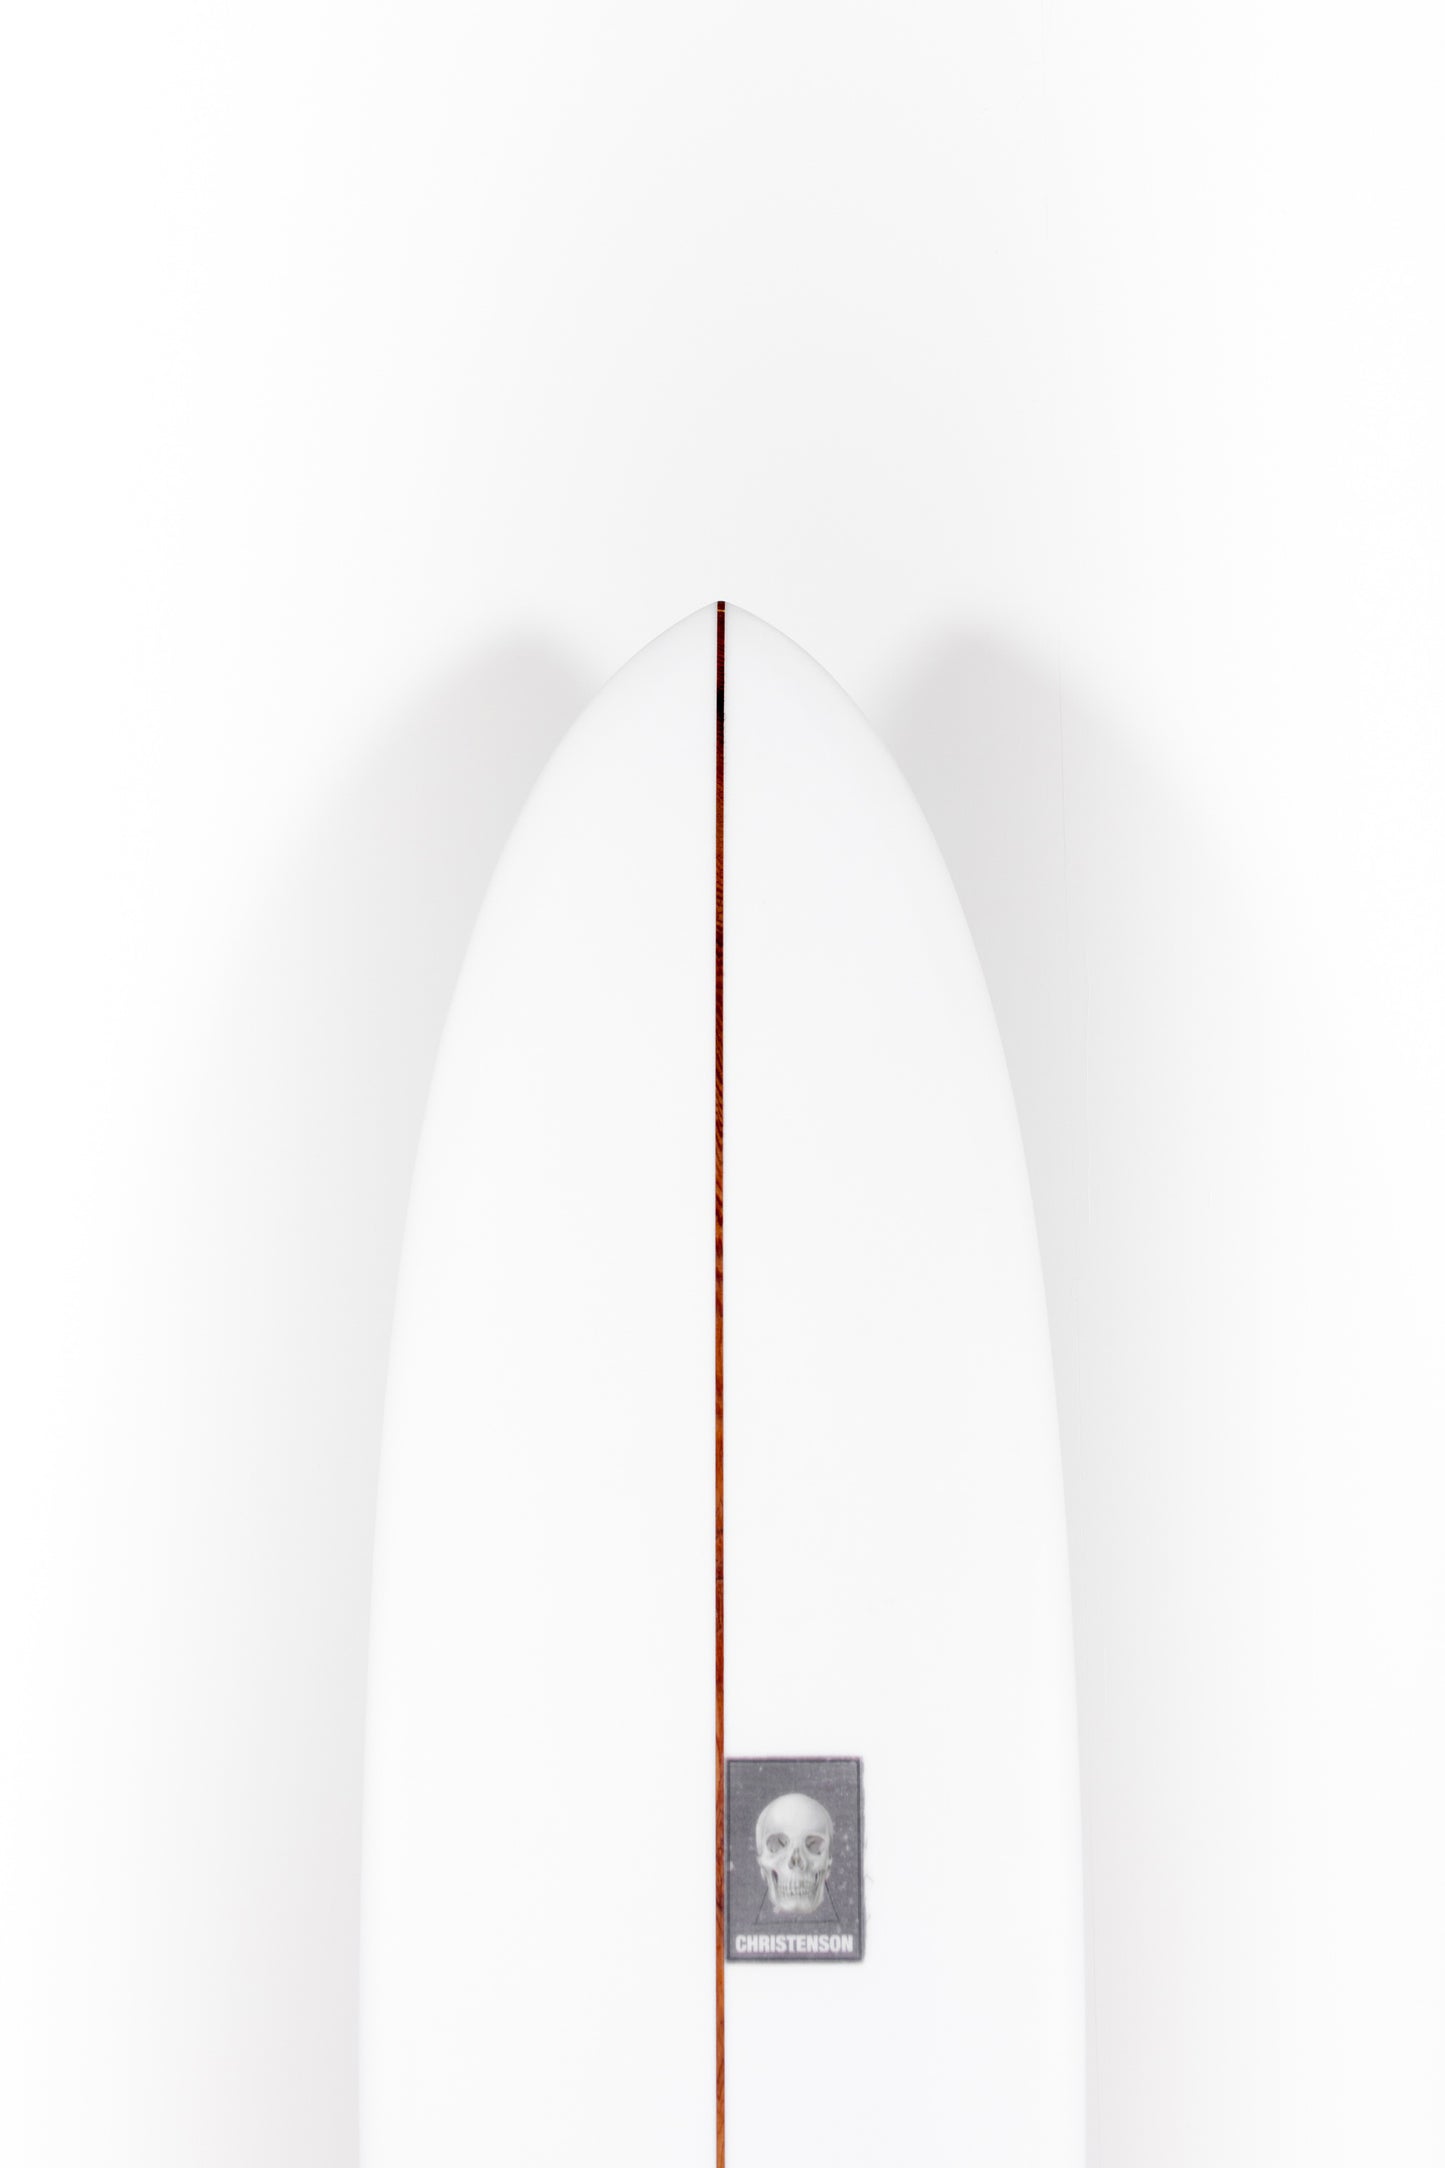 
                  
                    Pukas Surf Shop - Christenson Surfboards - TWIN TRACKER - 7'6" x 21 1/4  x 2 7/8 - CX03298
                  
                